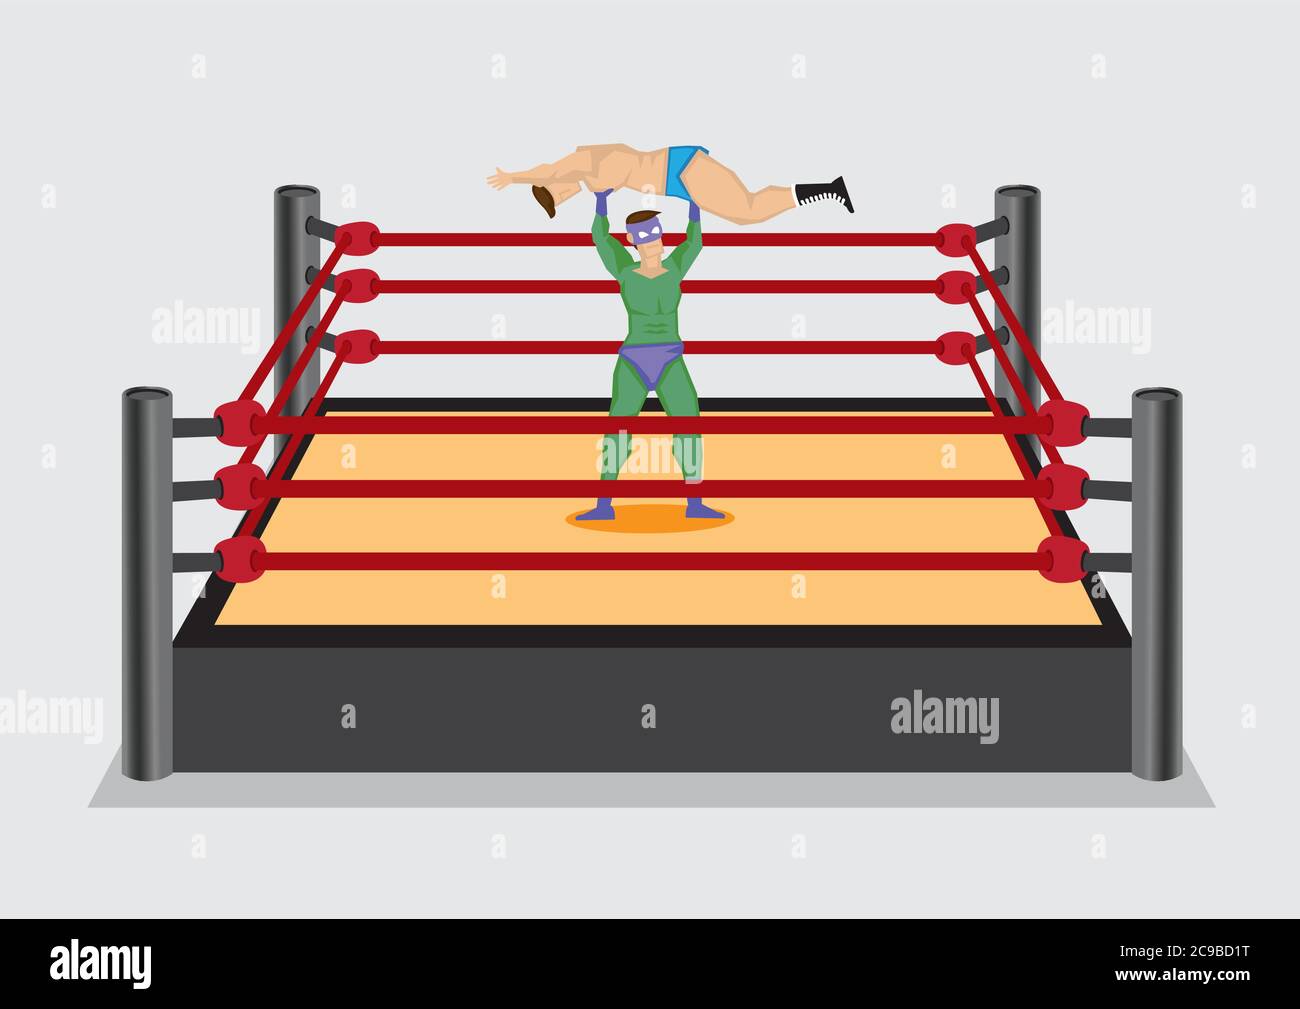 Wrestler in superhero costume lifts up opponent in wrestling ring, Vector cartoon illustration isolated on plain background. Stock Vector